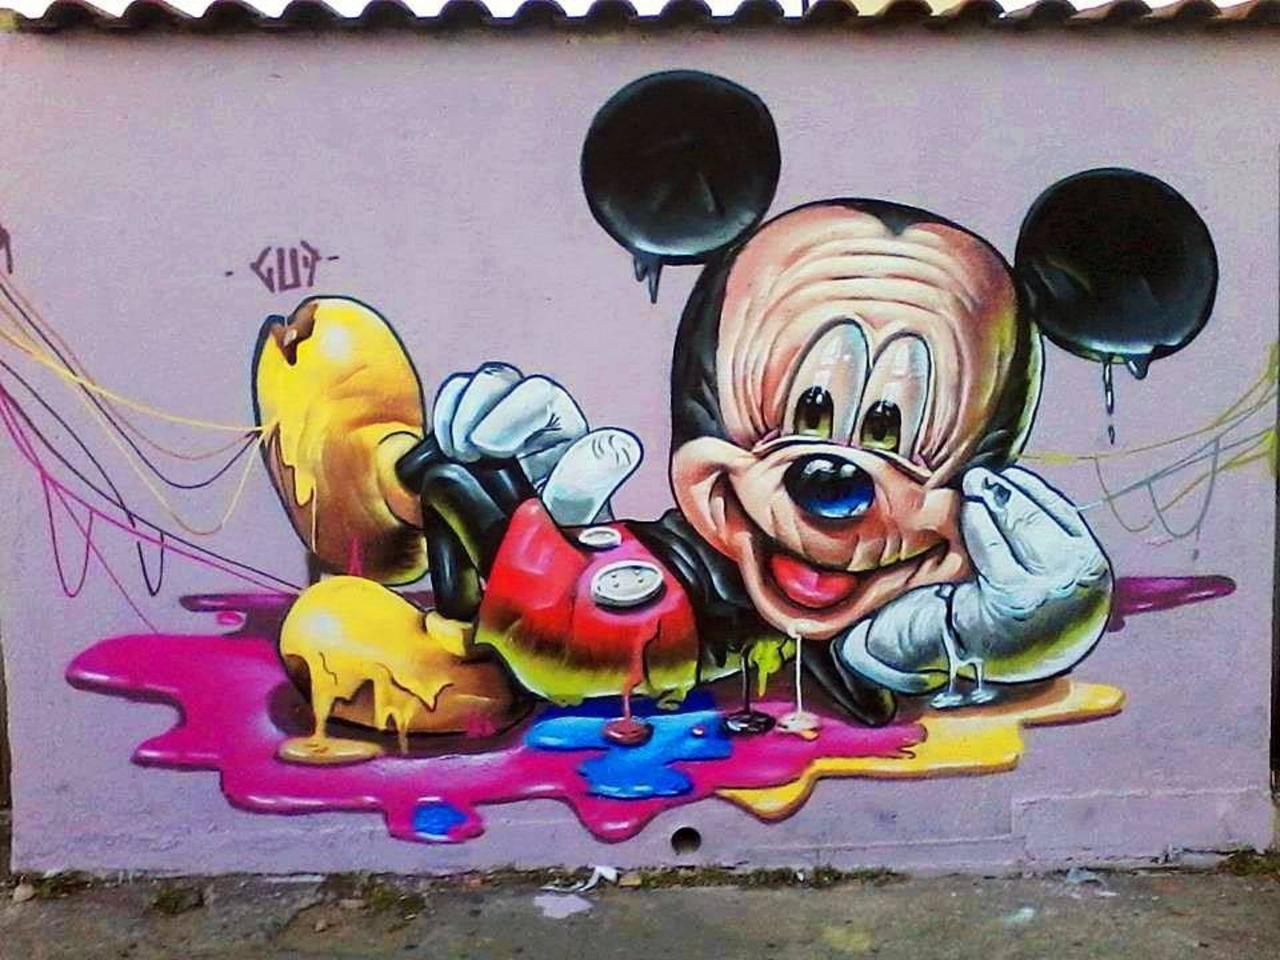 #artwork of gud , Brazil 
#art
#streetart
#graffiti
#mickeyMouse http://t.co/1u0XdHXcEd